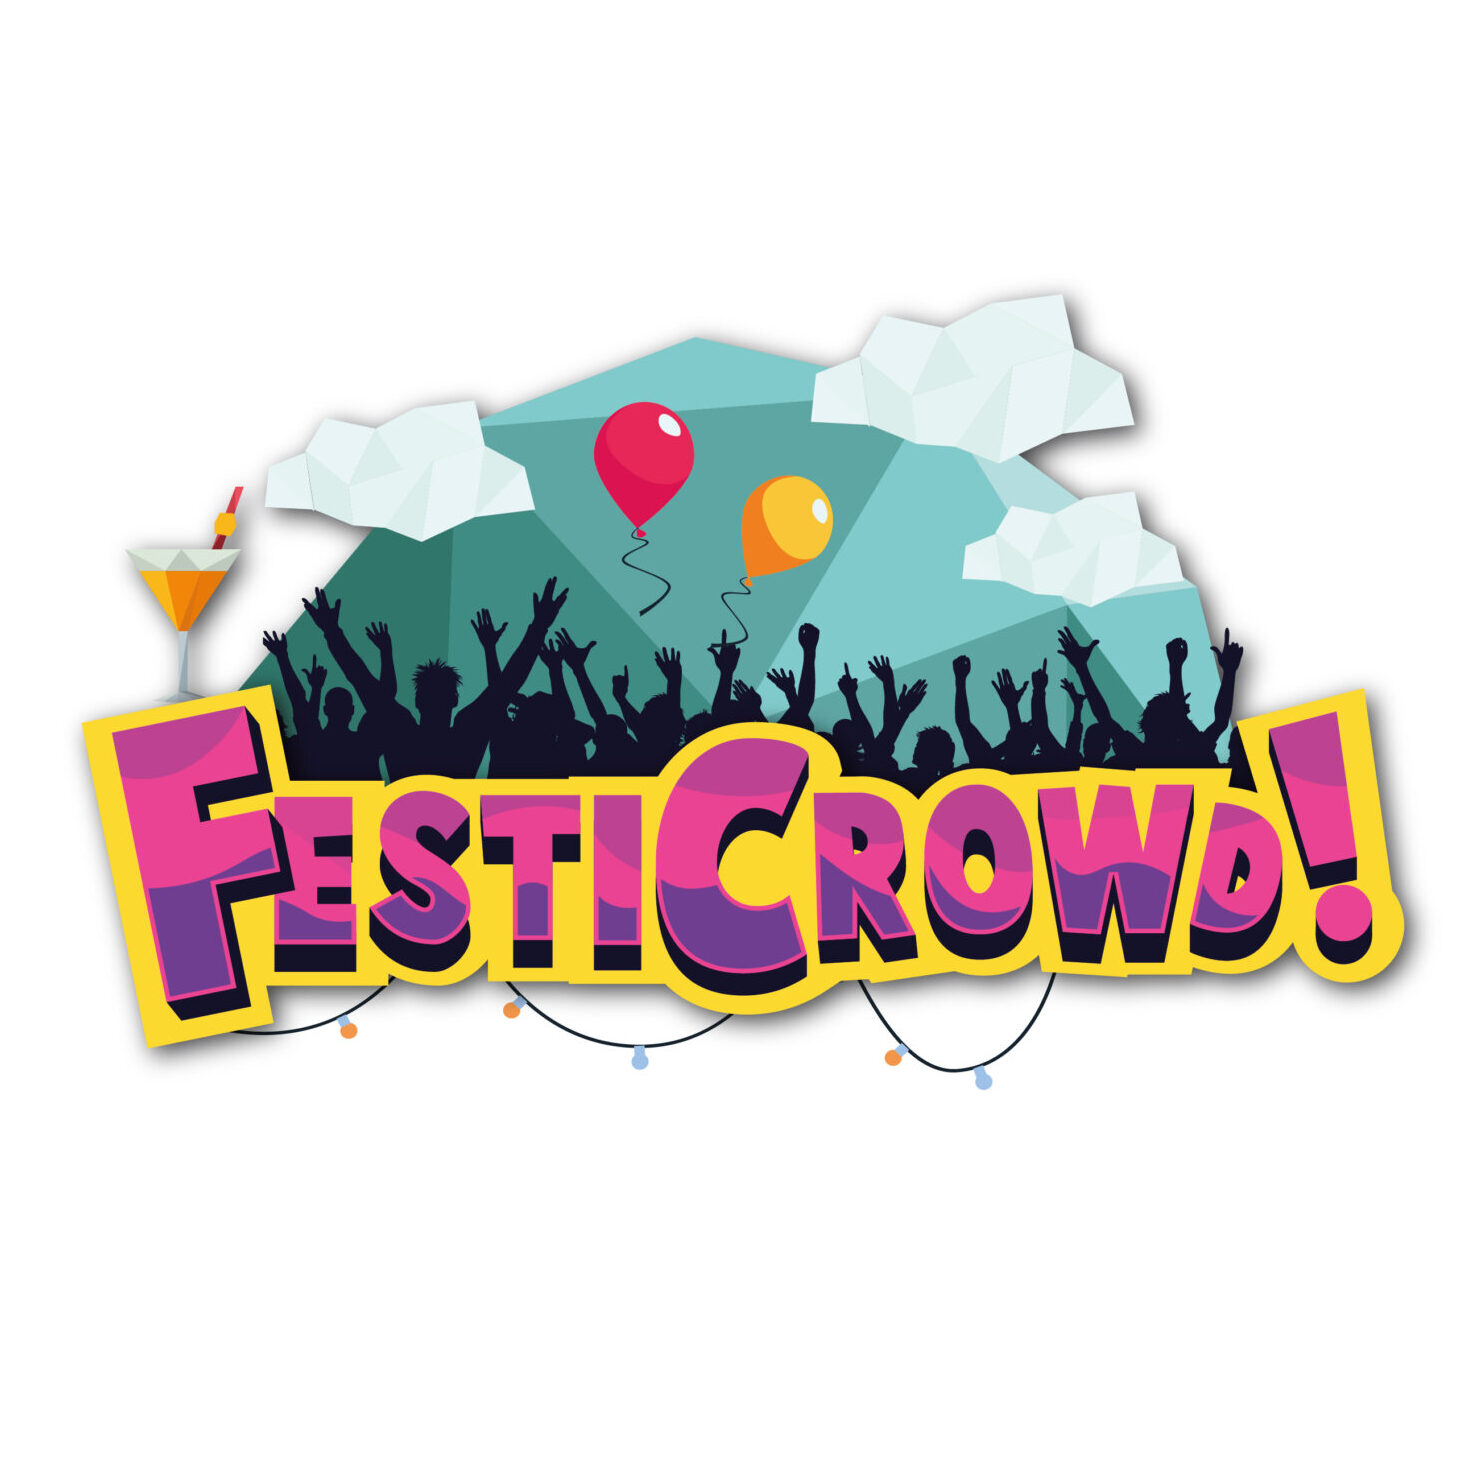 FestiCrowd / Startup company